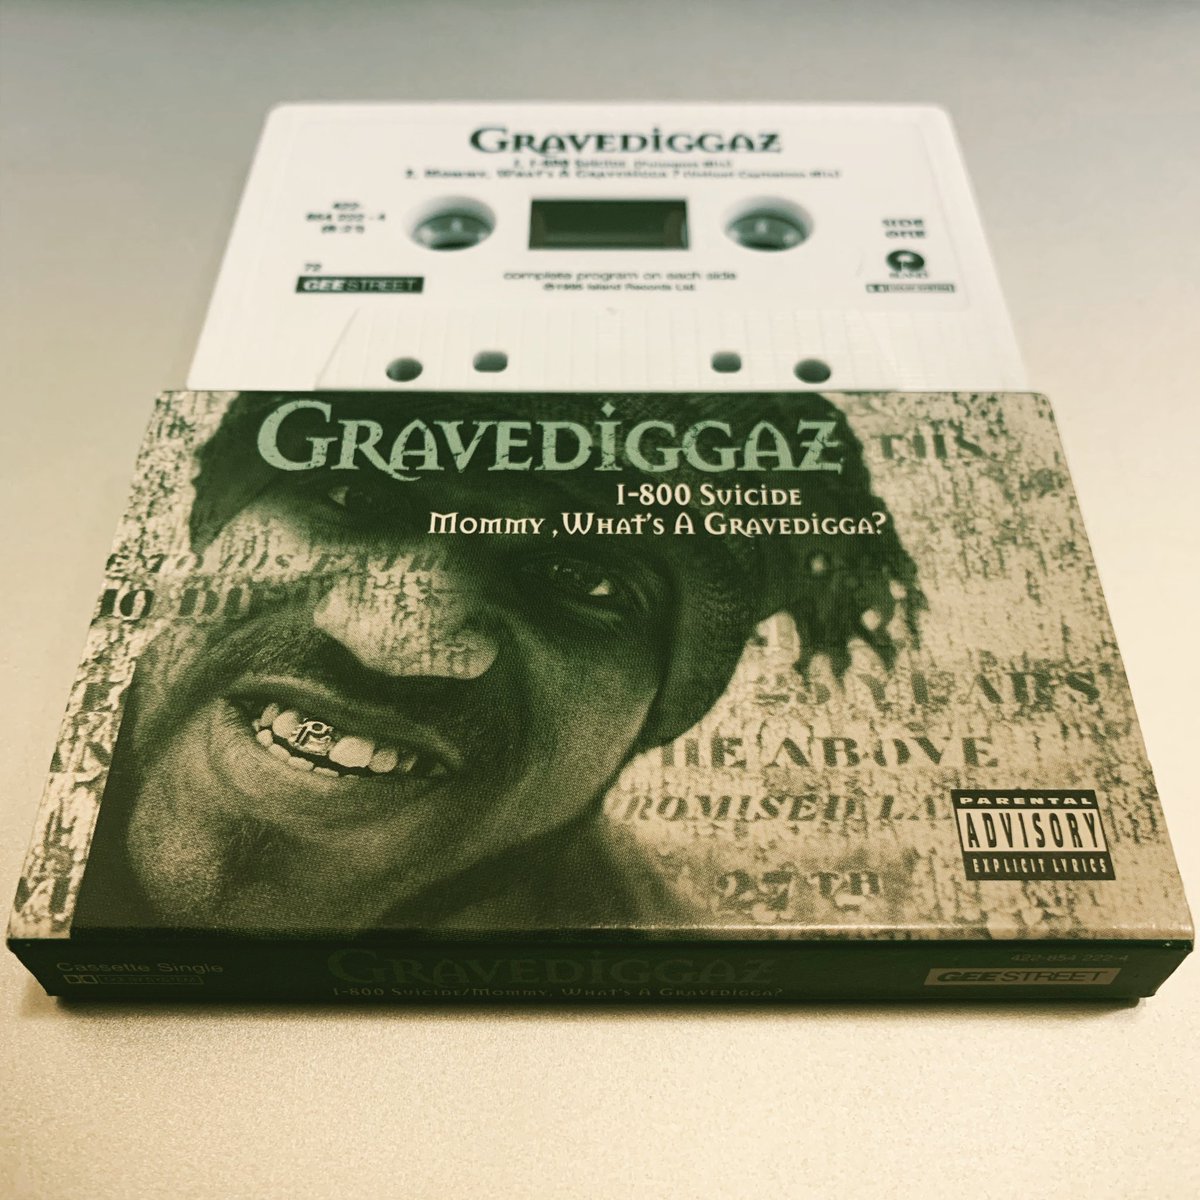 Gravediggaz - 1-800 Suicide / Mommy, What’s A Gravedigga?
@DJPrincePaul @Frukwan @RZA 
#classic #hiphop #cassette #single #geestreet #records #princepaul #theundertaker #frukwan #thegatekeeper #poetic #thegrymreaper #riptoopoetic #rza #therzarector #gravediggaz #hiphopgods